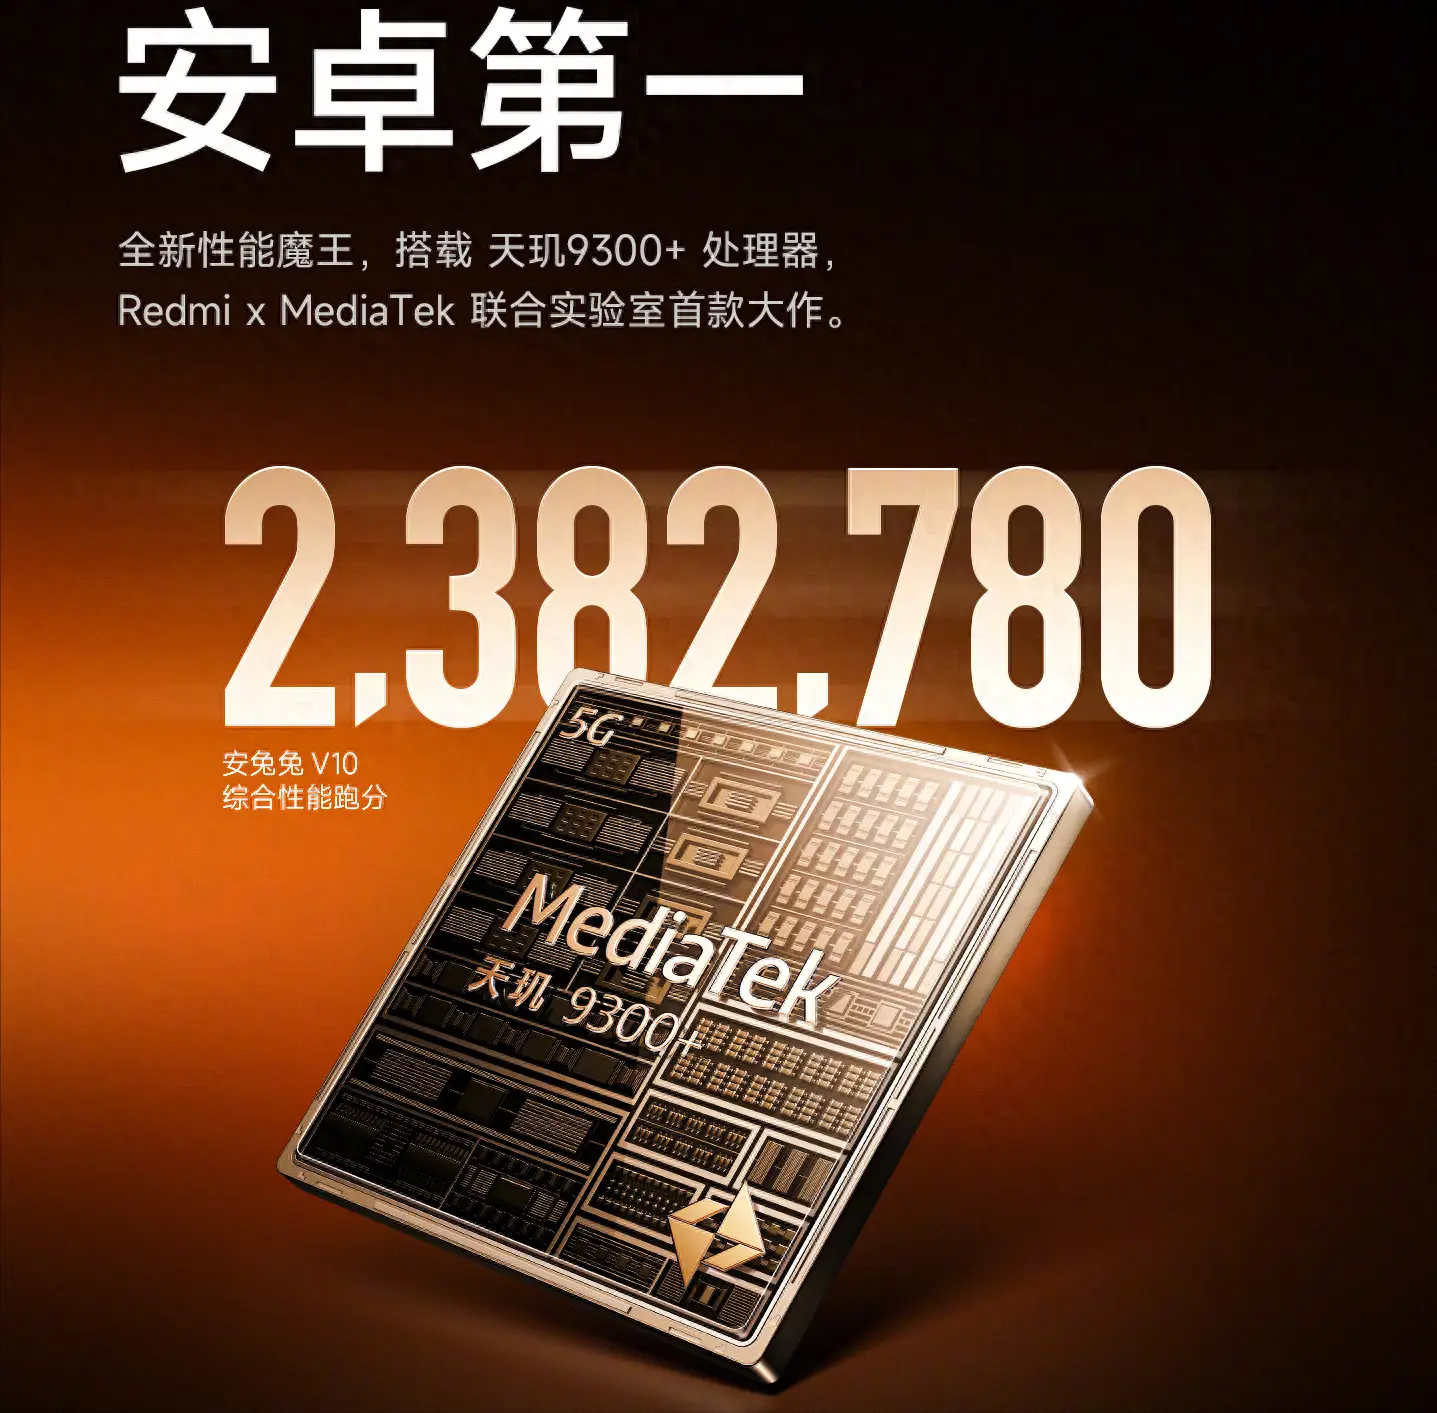 DDR3 硬件平台虽历史悠久，但其支持的 CPU 性能仍傲视群雄  第5张